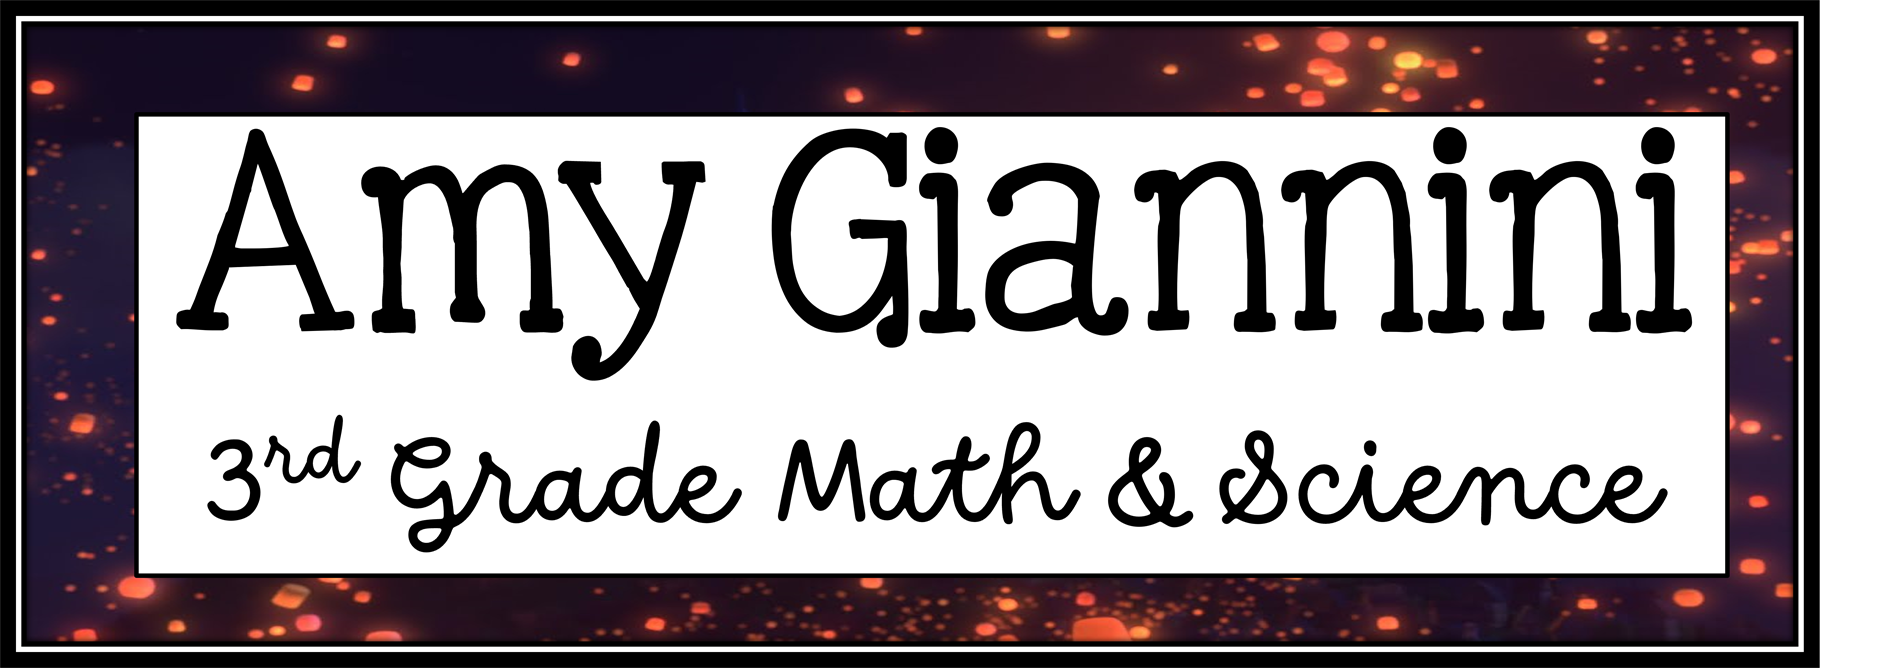 Heading Amy Giannini 3rd Grade Math & Science